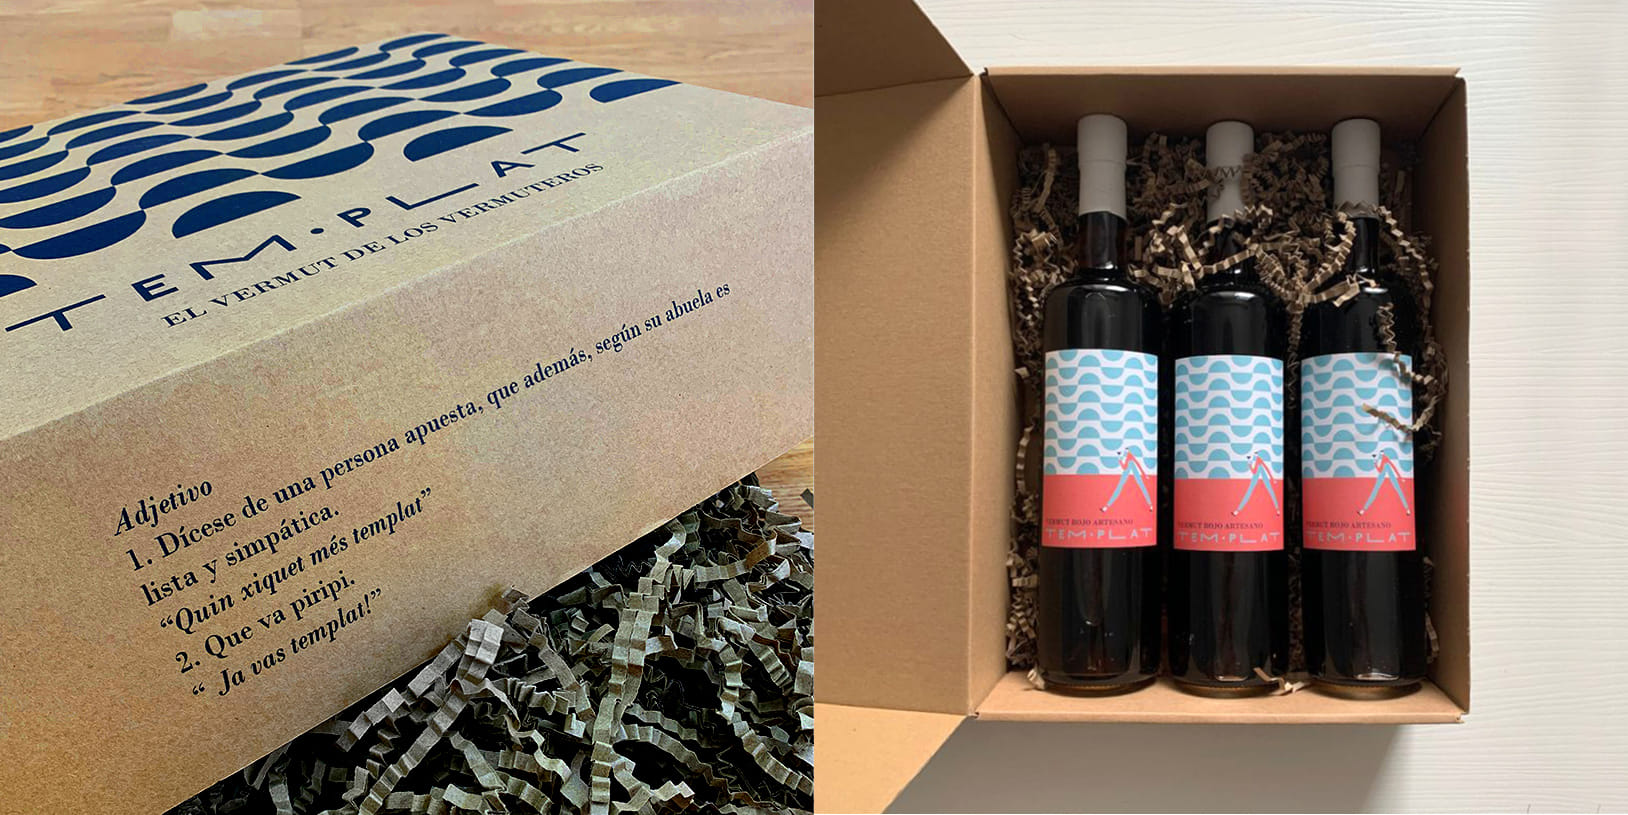 Packaging ecológico de vermut artesano Templat.